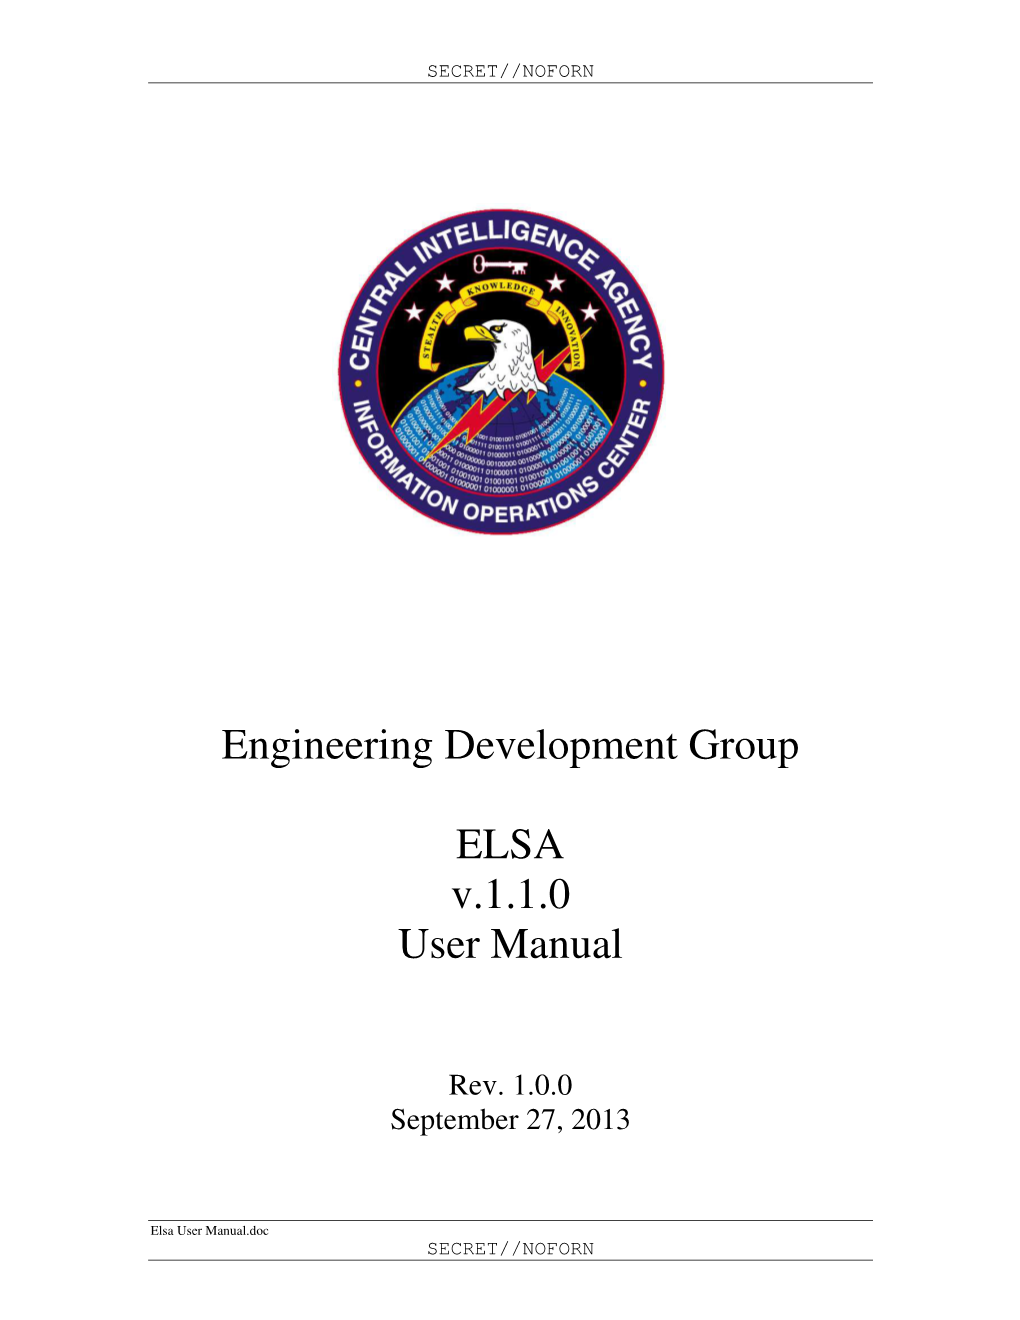 Engineering Development Group ELSA V.1.1.0 User Manual